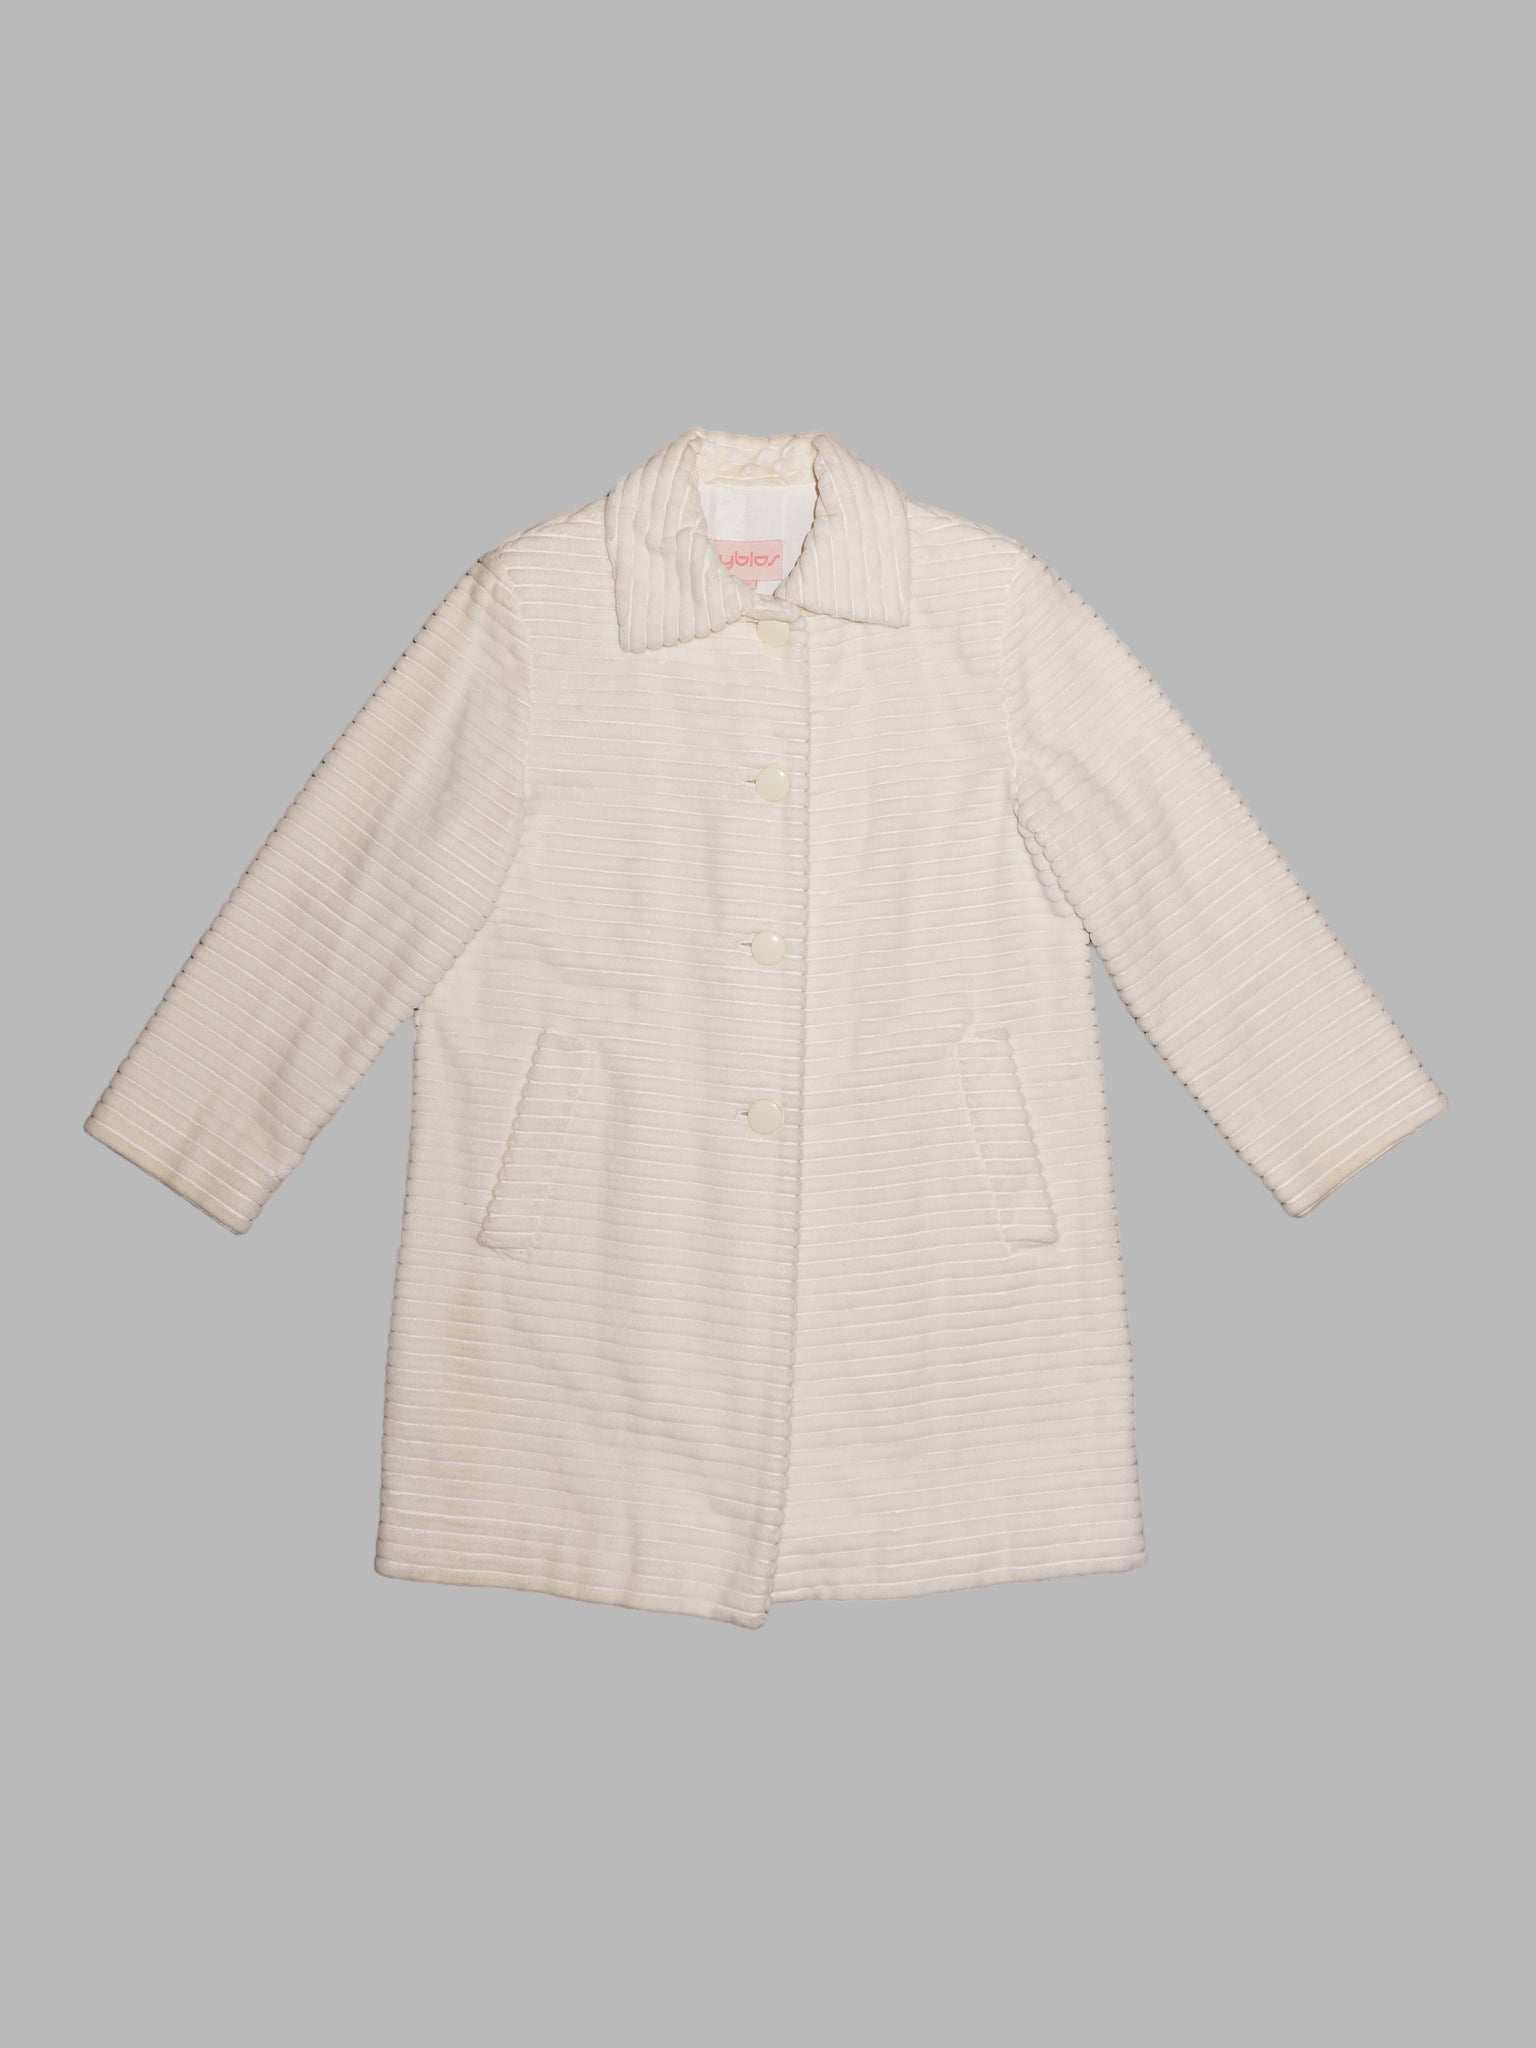 Byblos 1990s cream off-white cotton fluffy corduroy coat - size 40